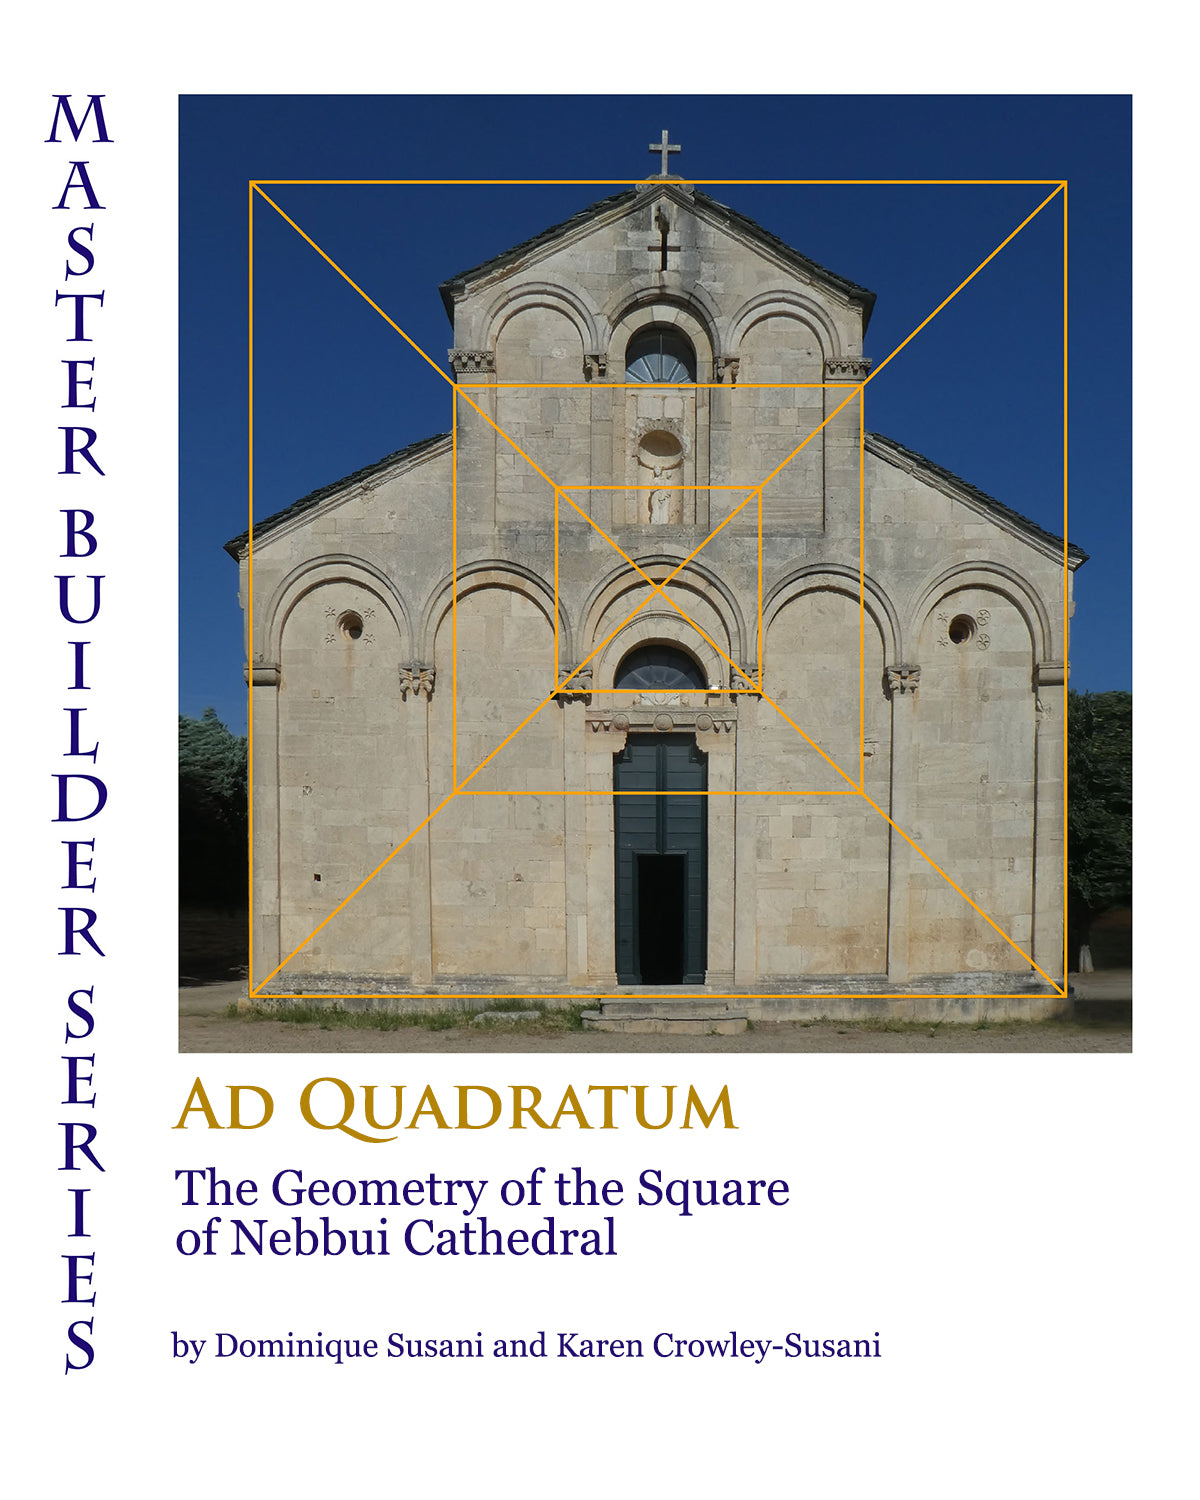 Ad Quadratum; The Geometry of the Square of Nebbiu Cathedral